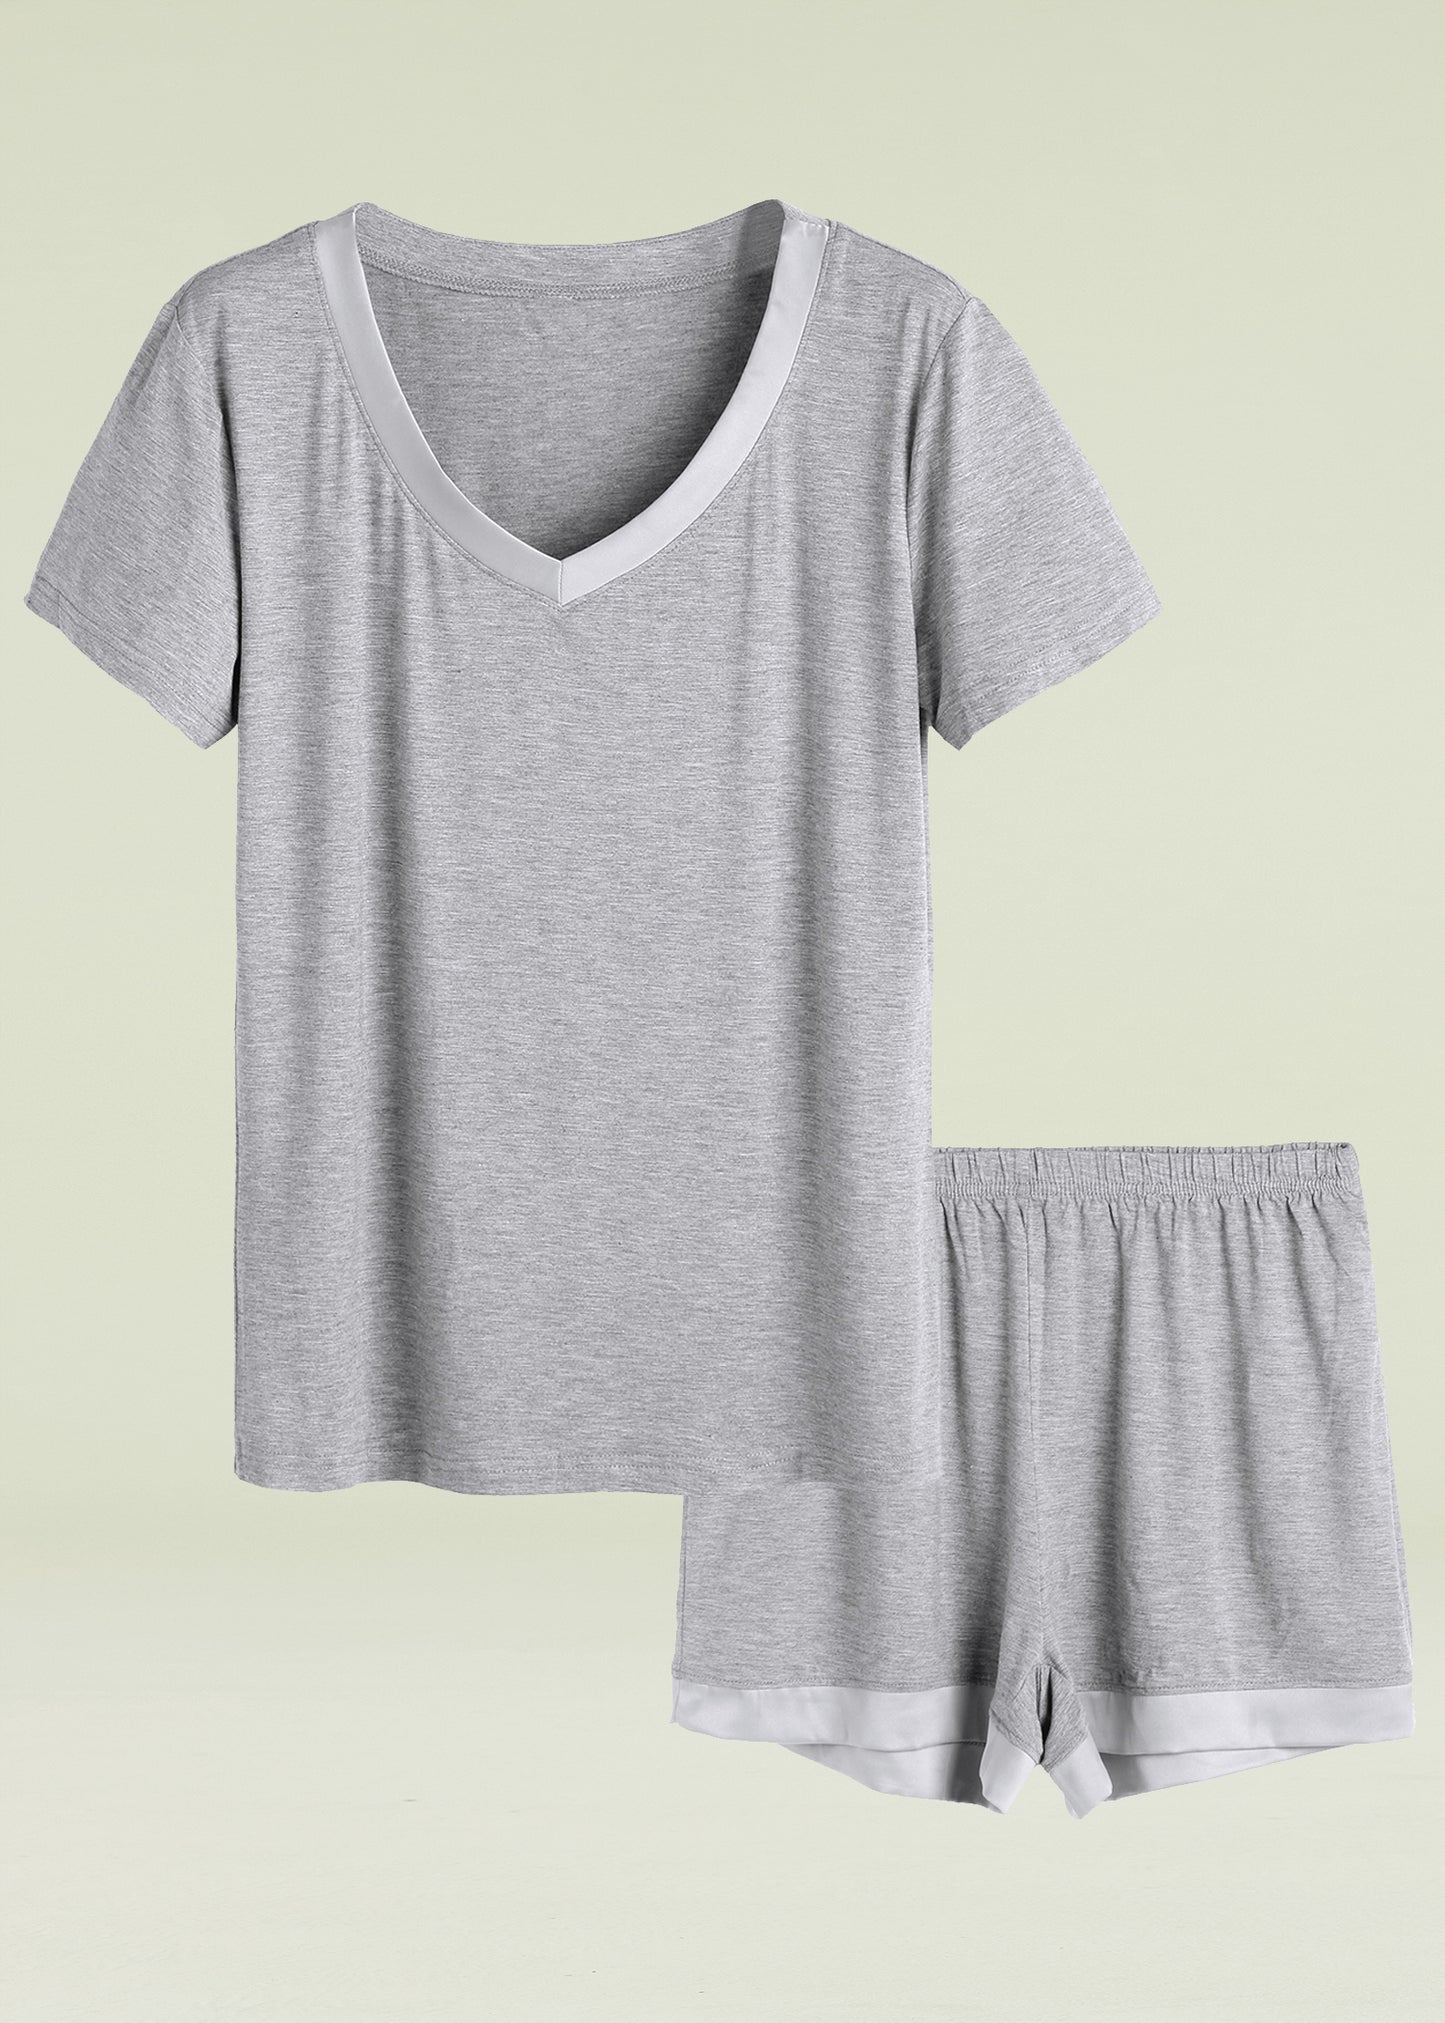 Women's Petite Size Pajama Short Sets Two Piece Loungewear